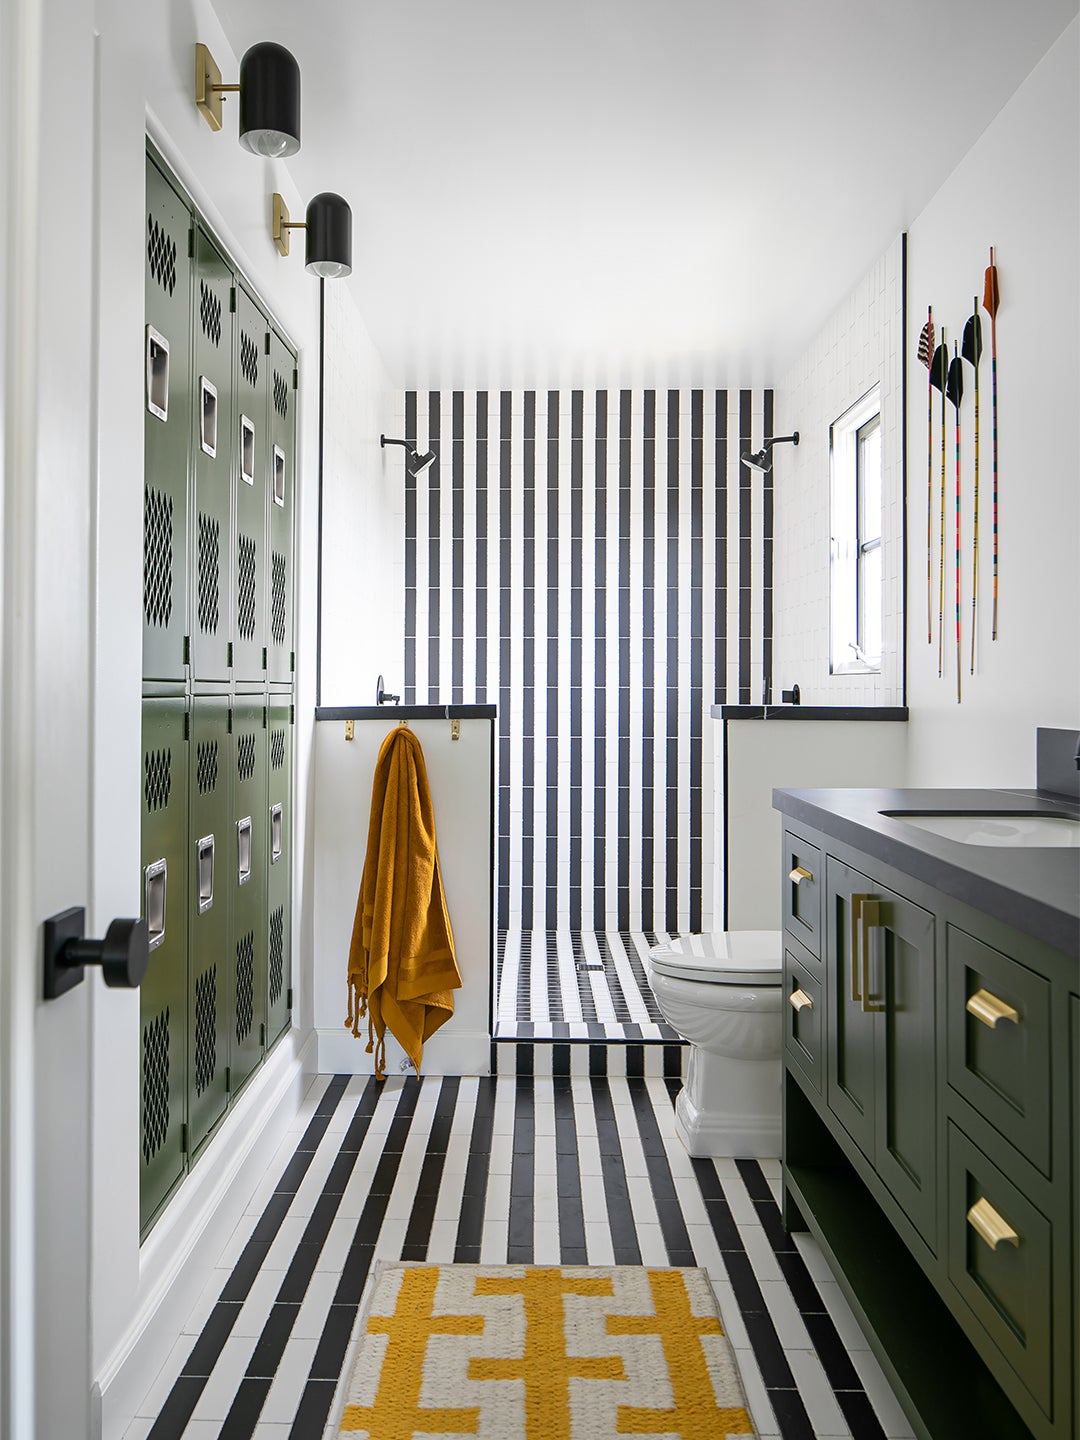 Striped bathroom tiles